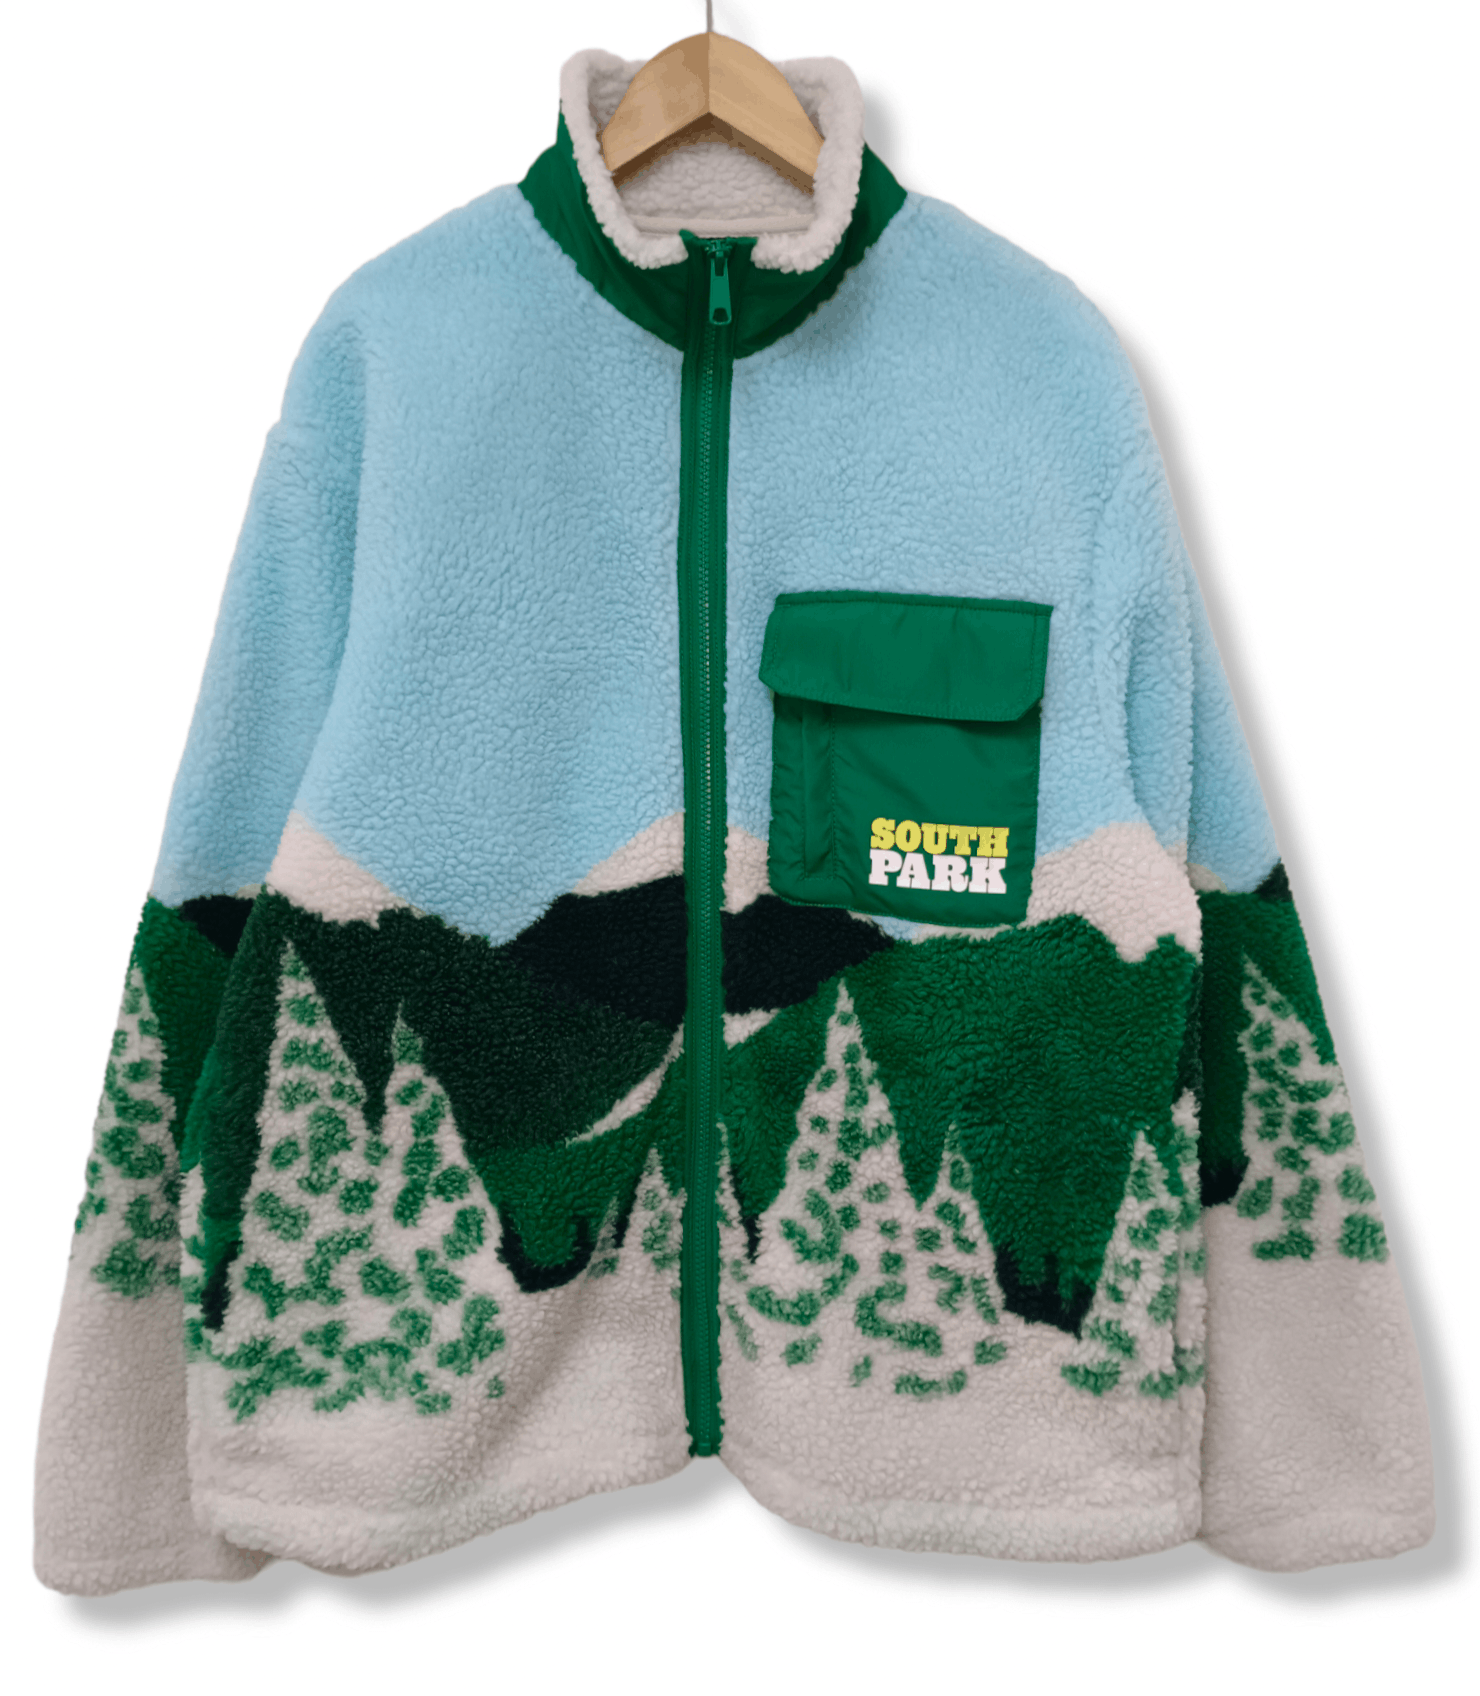 H&M Rare H&M Limited Edition South Park Fleece Jacket | Grailed